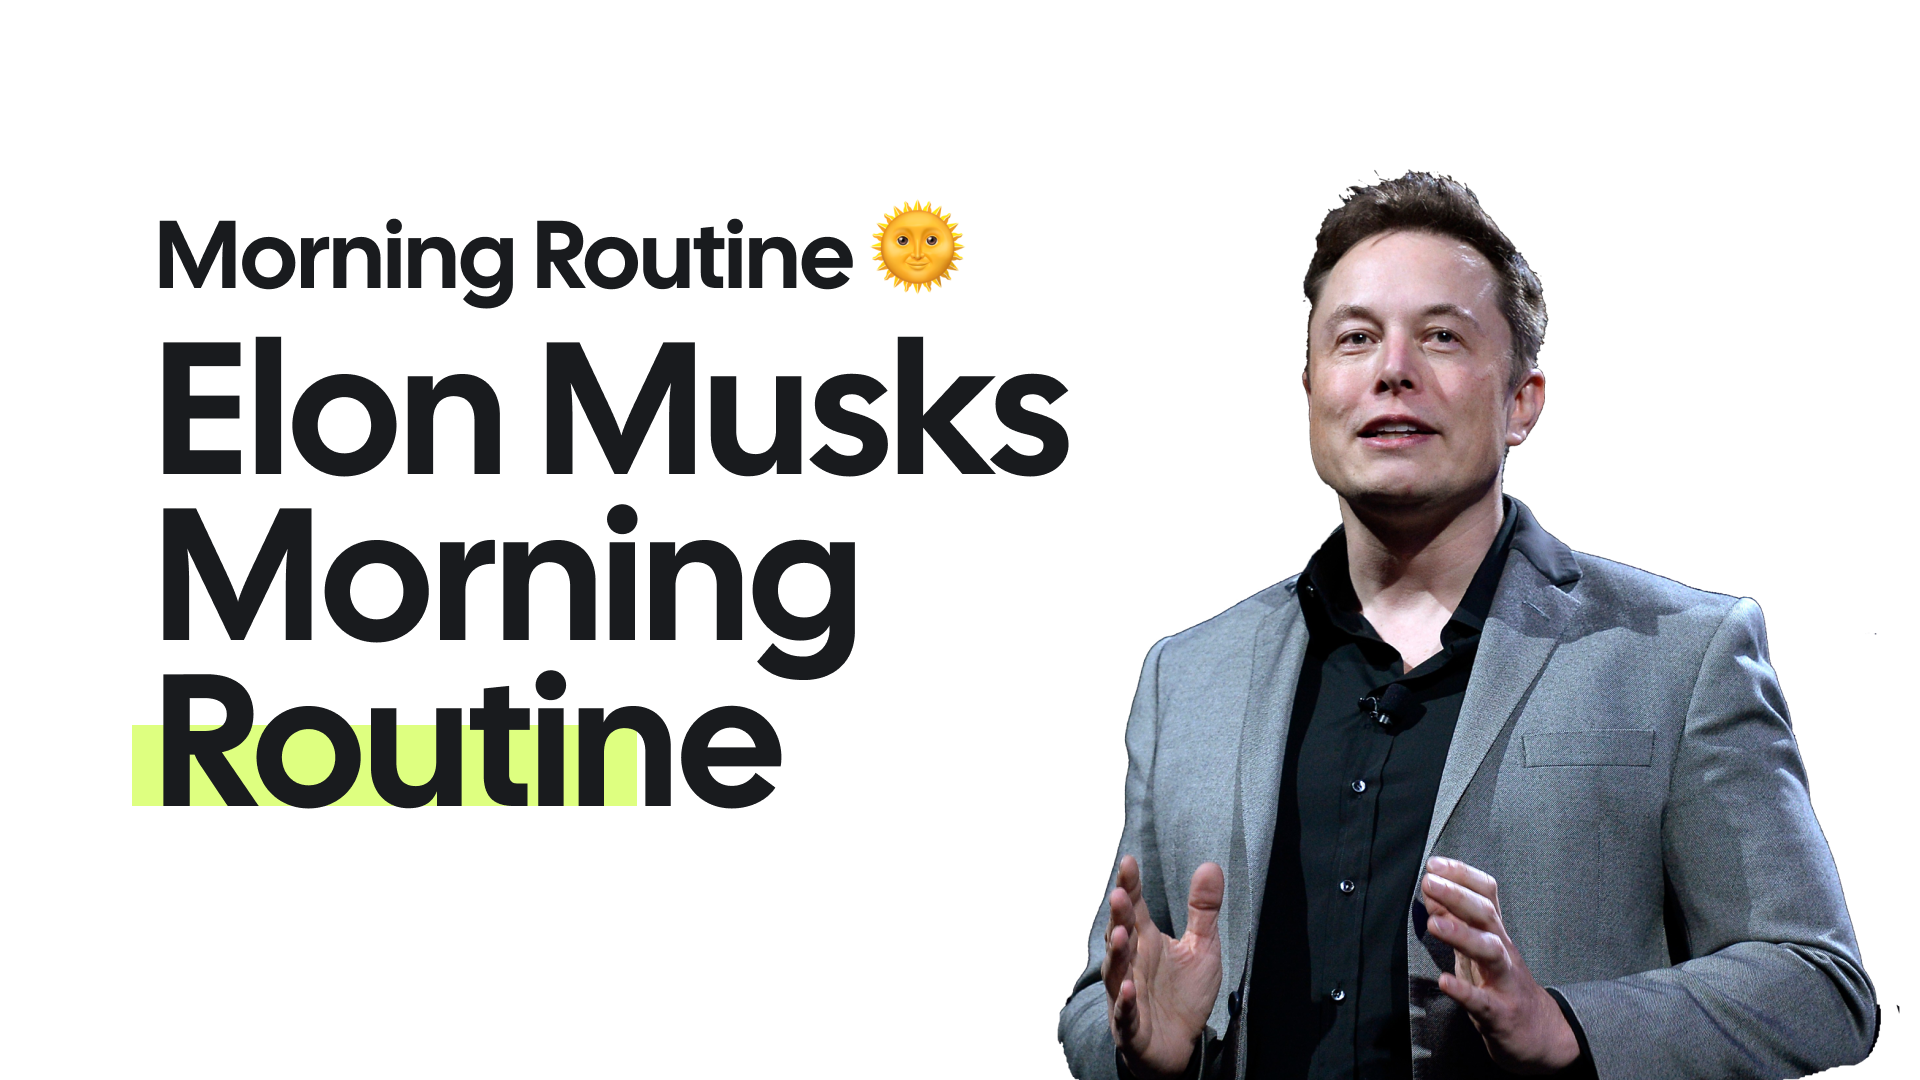 Elon Musk's Morning Routine